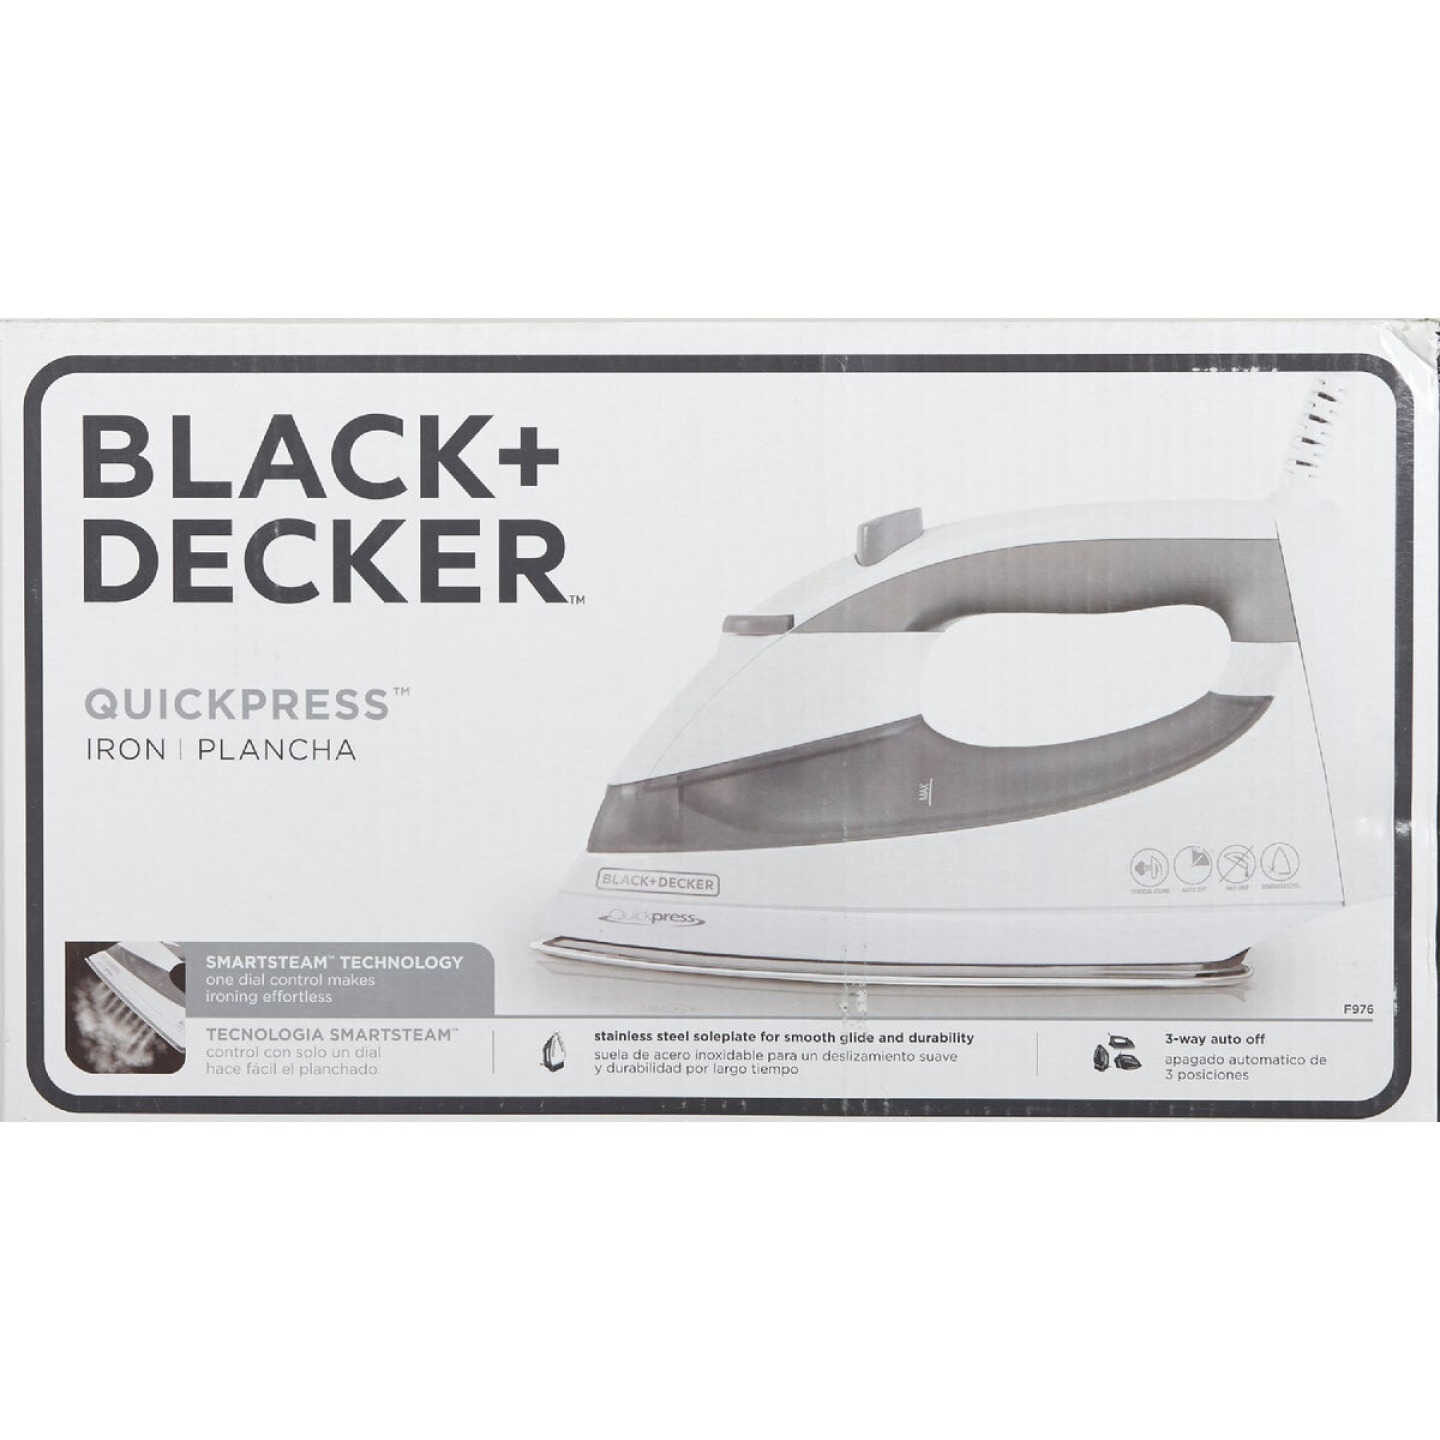 Black & Decker Press Irons